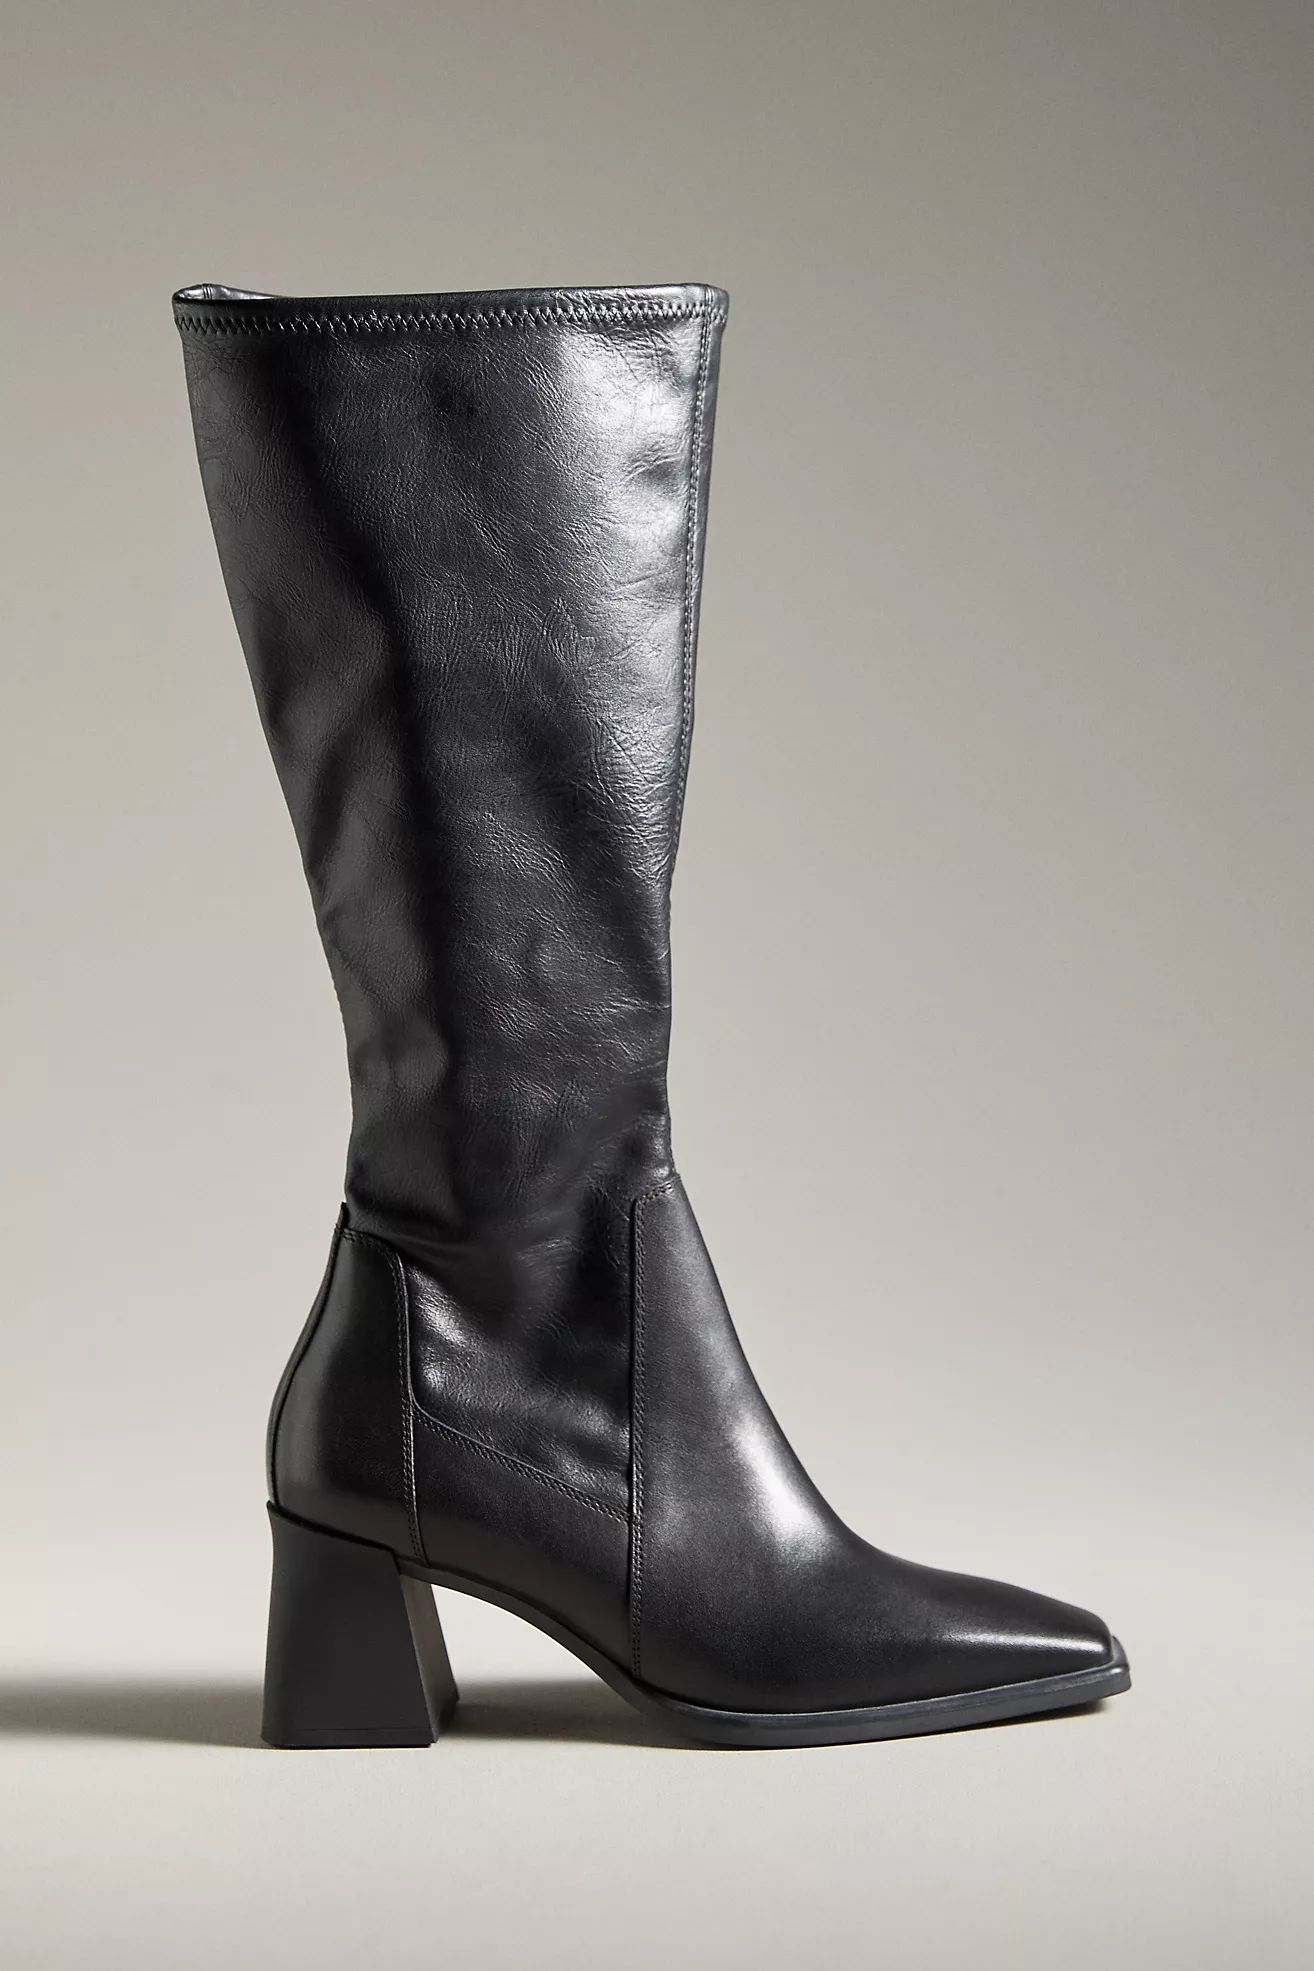 Vagabond Hedda Tall Boots | Anthropologie (US)